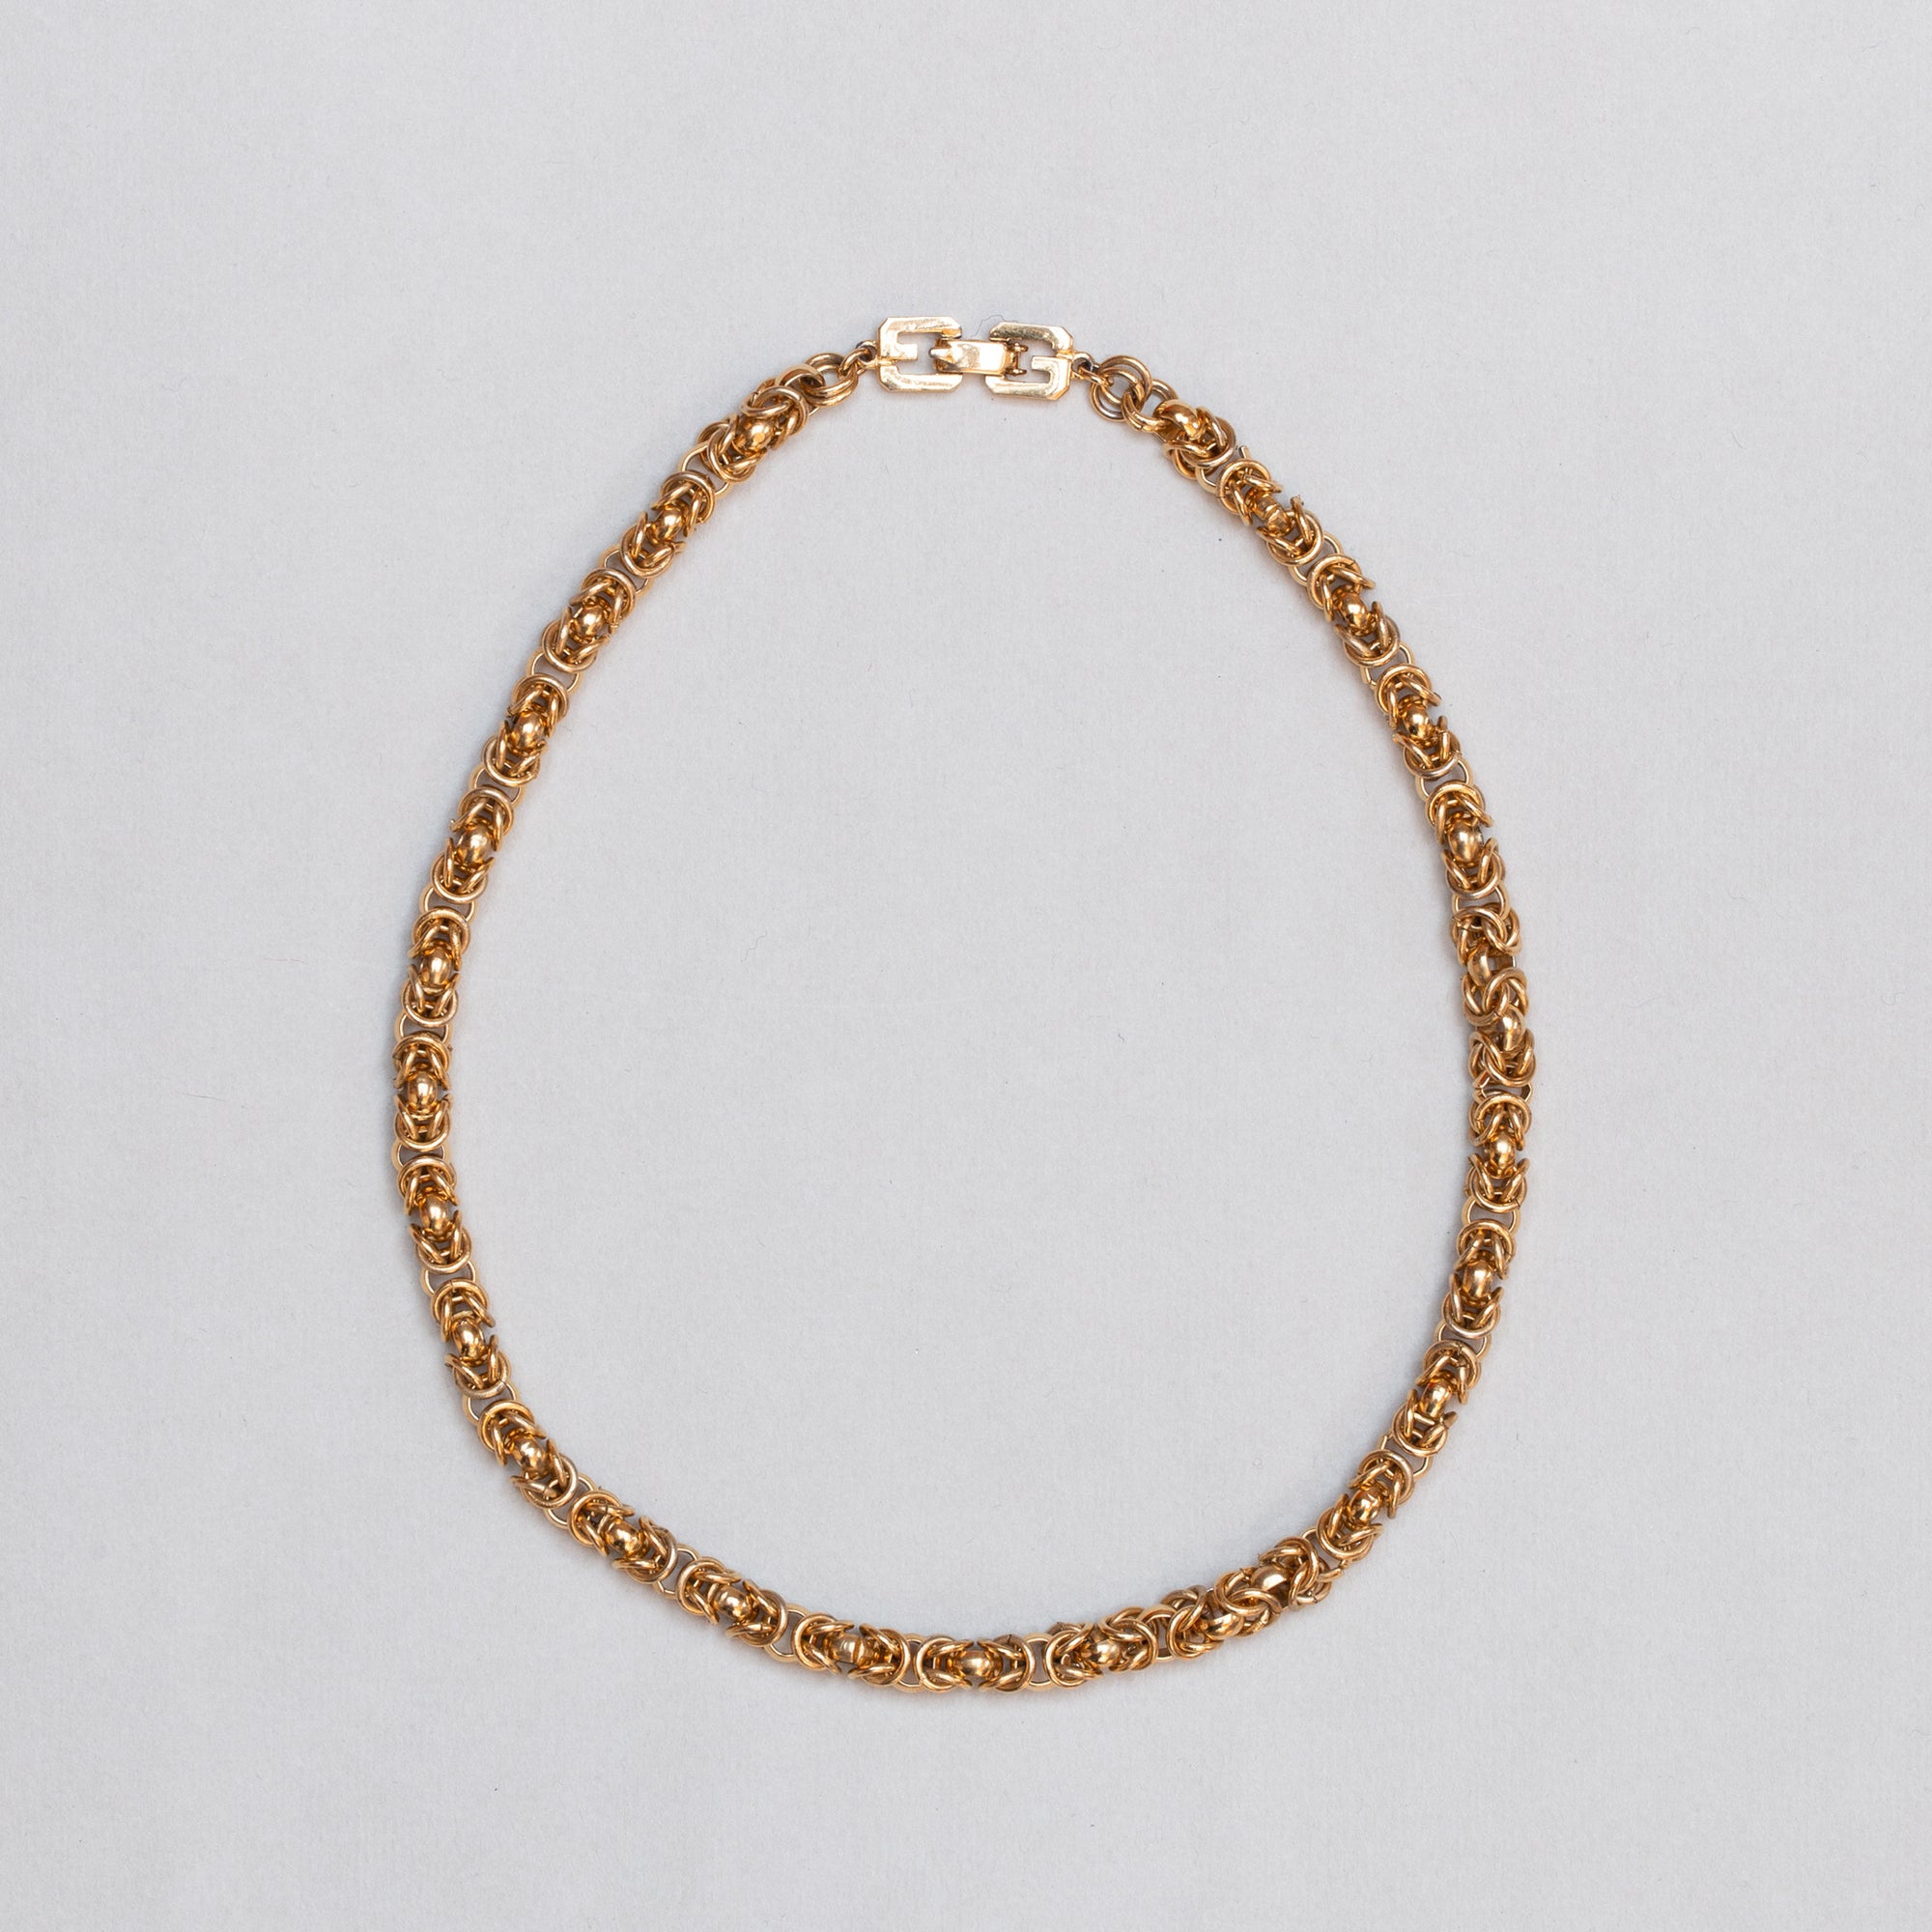 Vintage Givenchy Gold Byzantine Chain Necklace